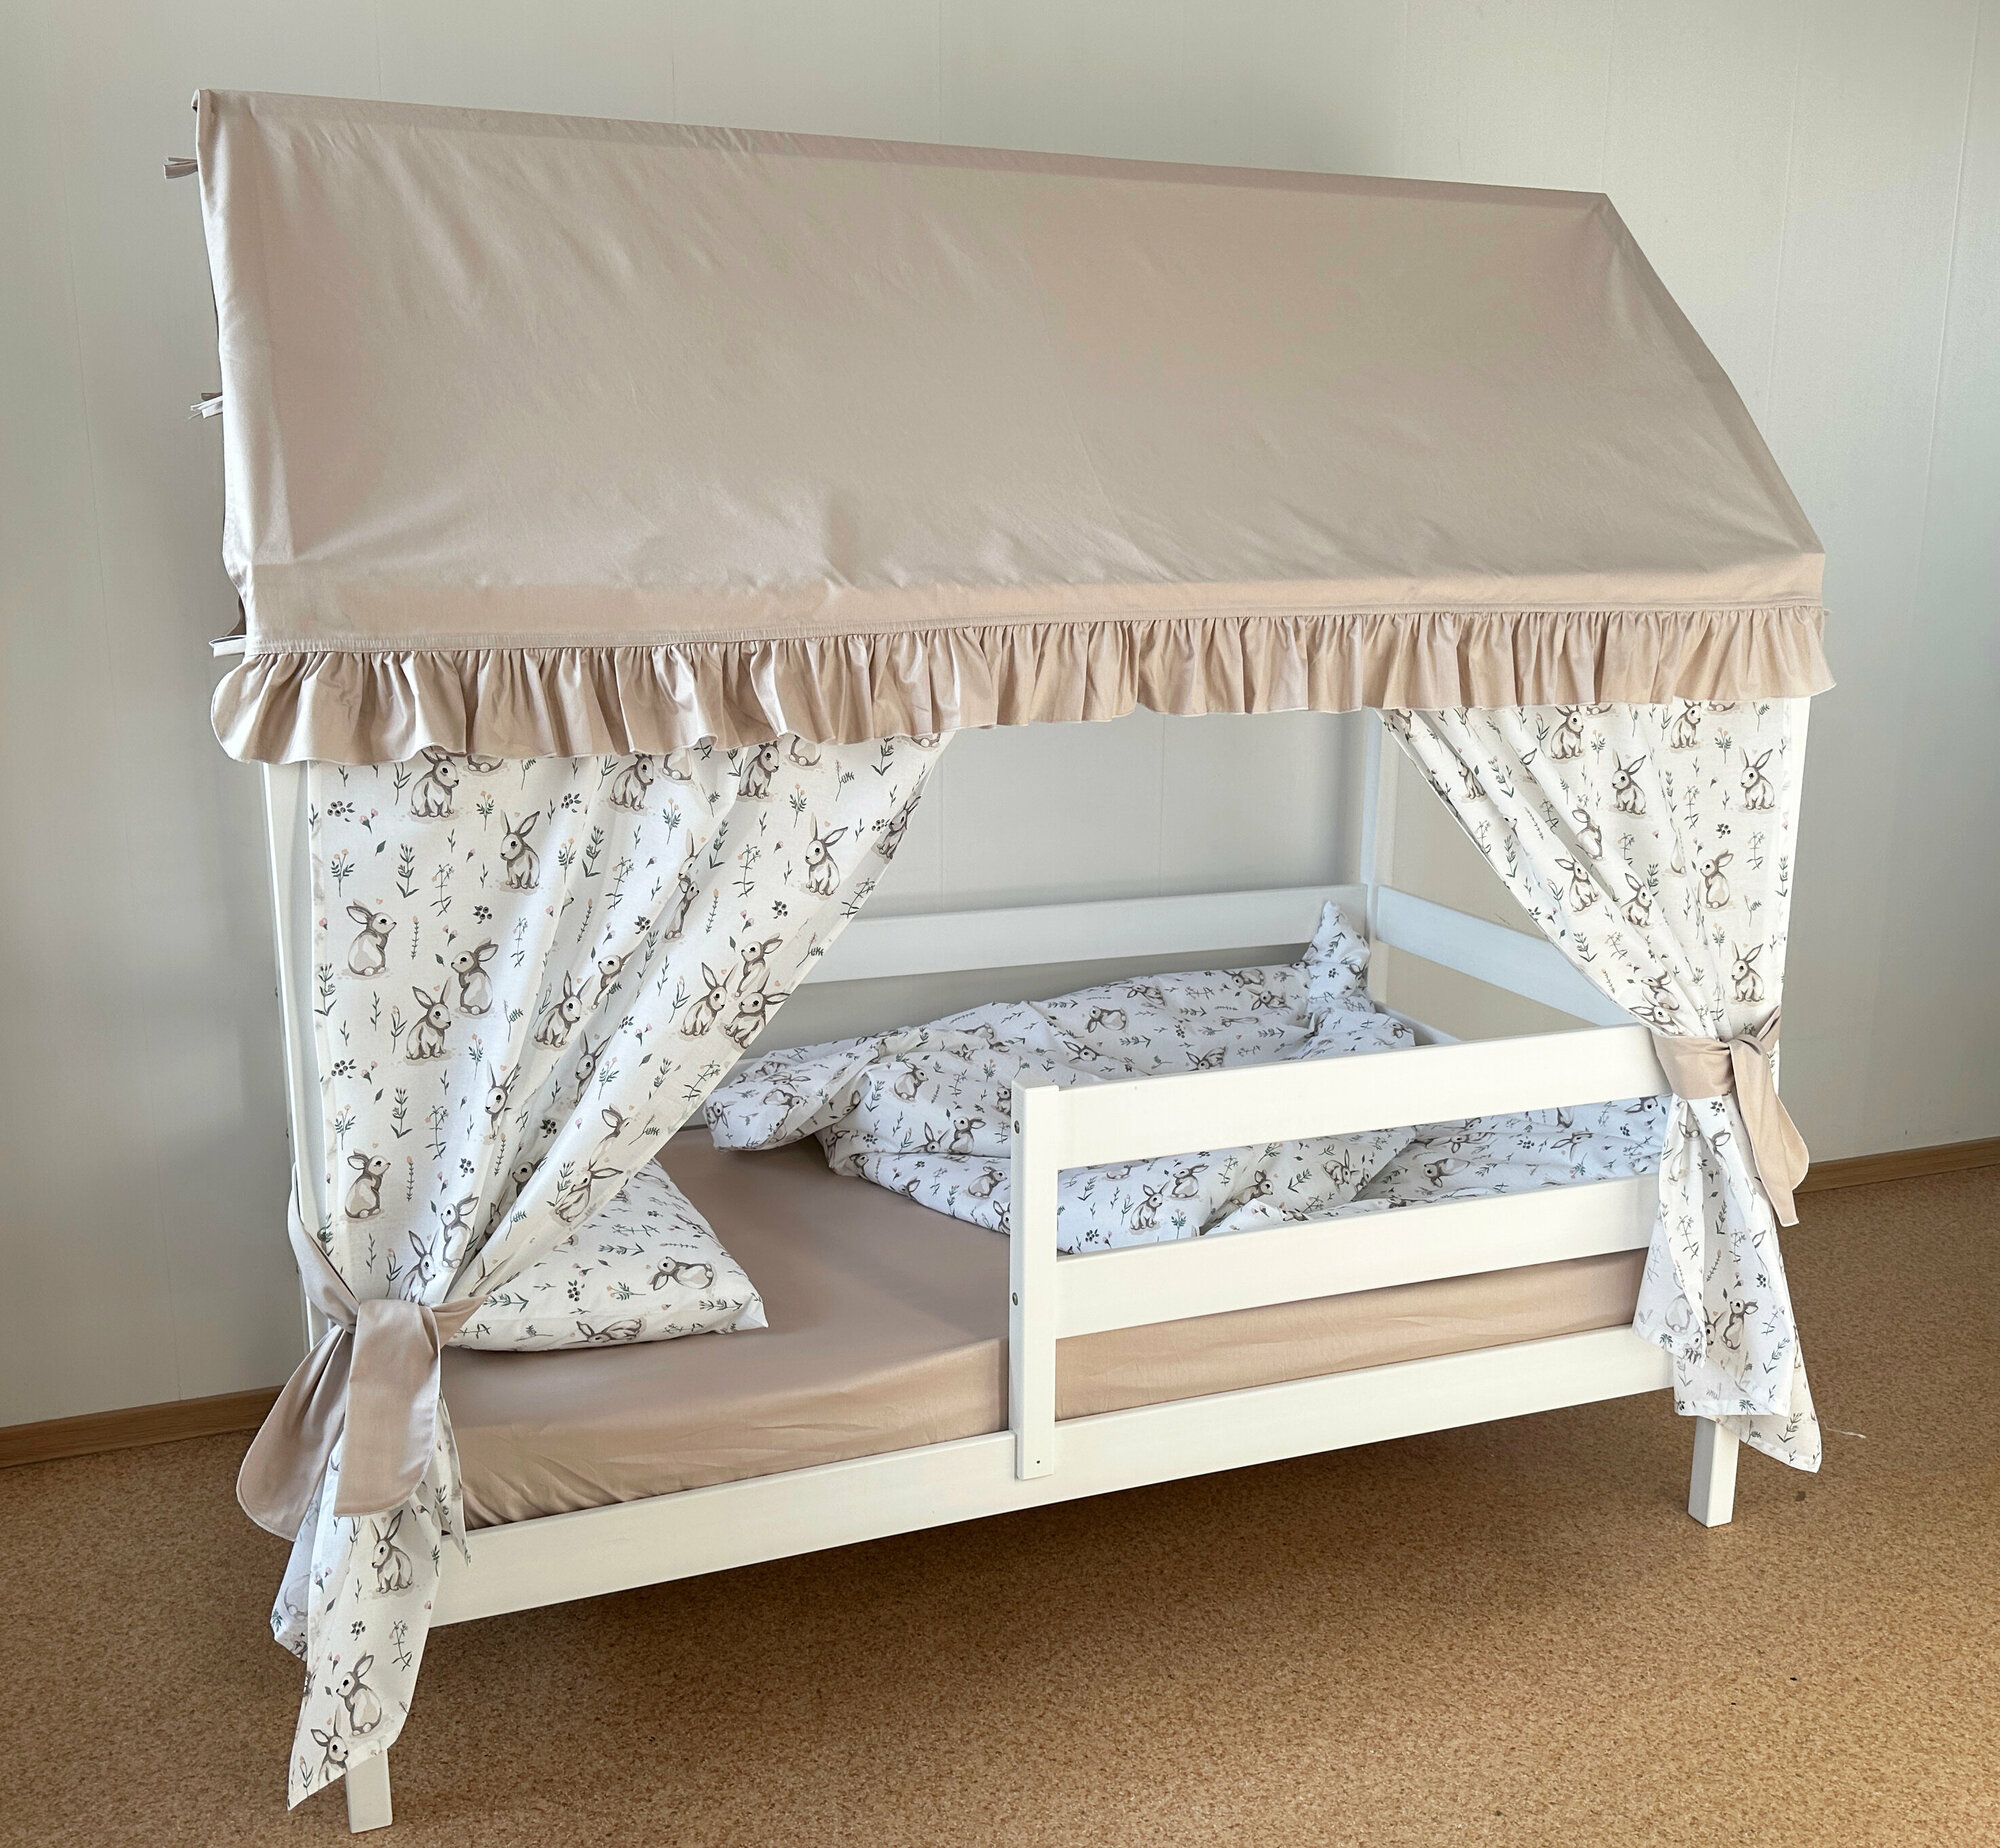 Текстиль на кровать домик 80х160 см (звезды-кофе) ТД-36